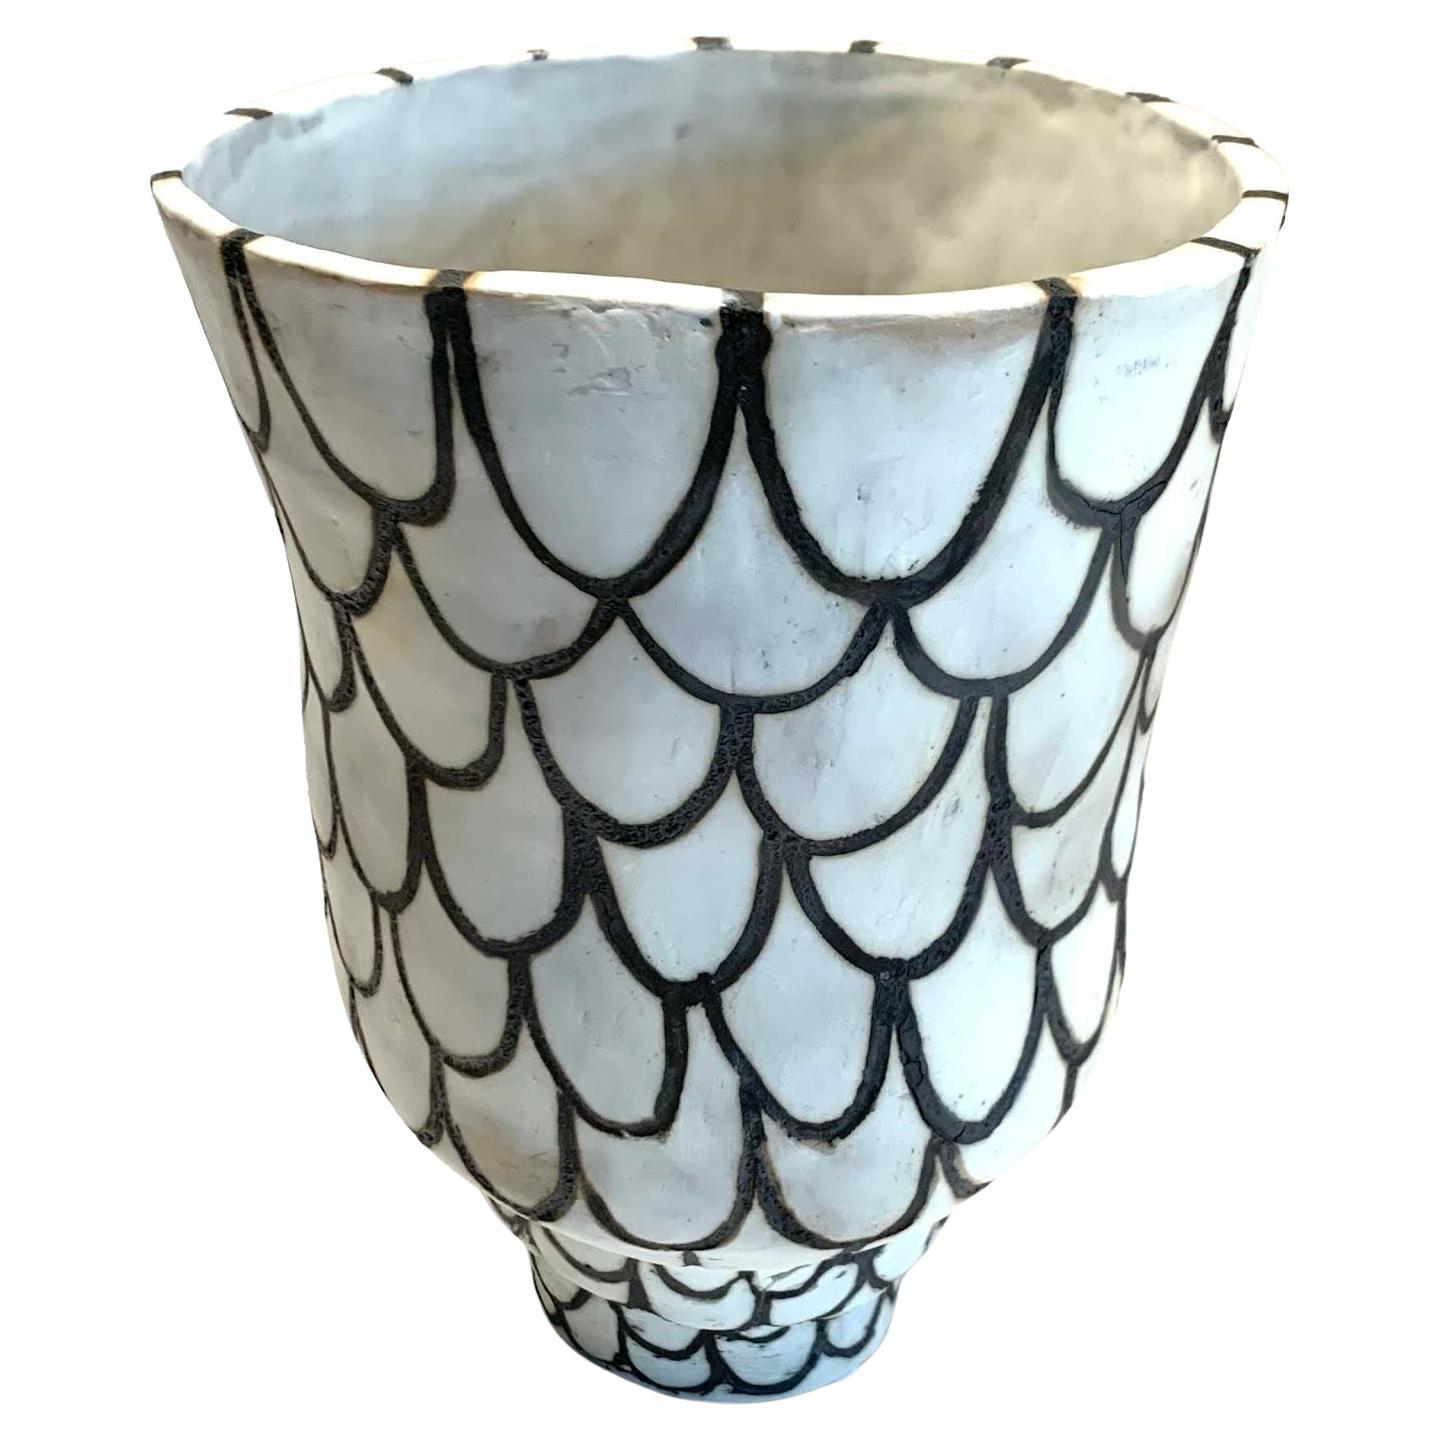 Black & White Fish Scale Design Vase by Ceramicist Brenda Holzke, U.S.A